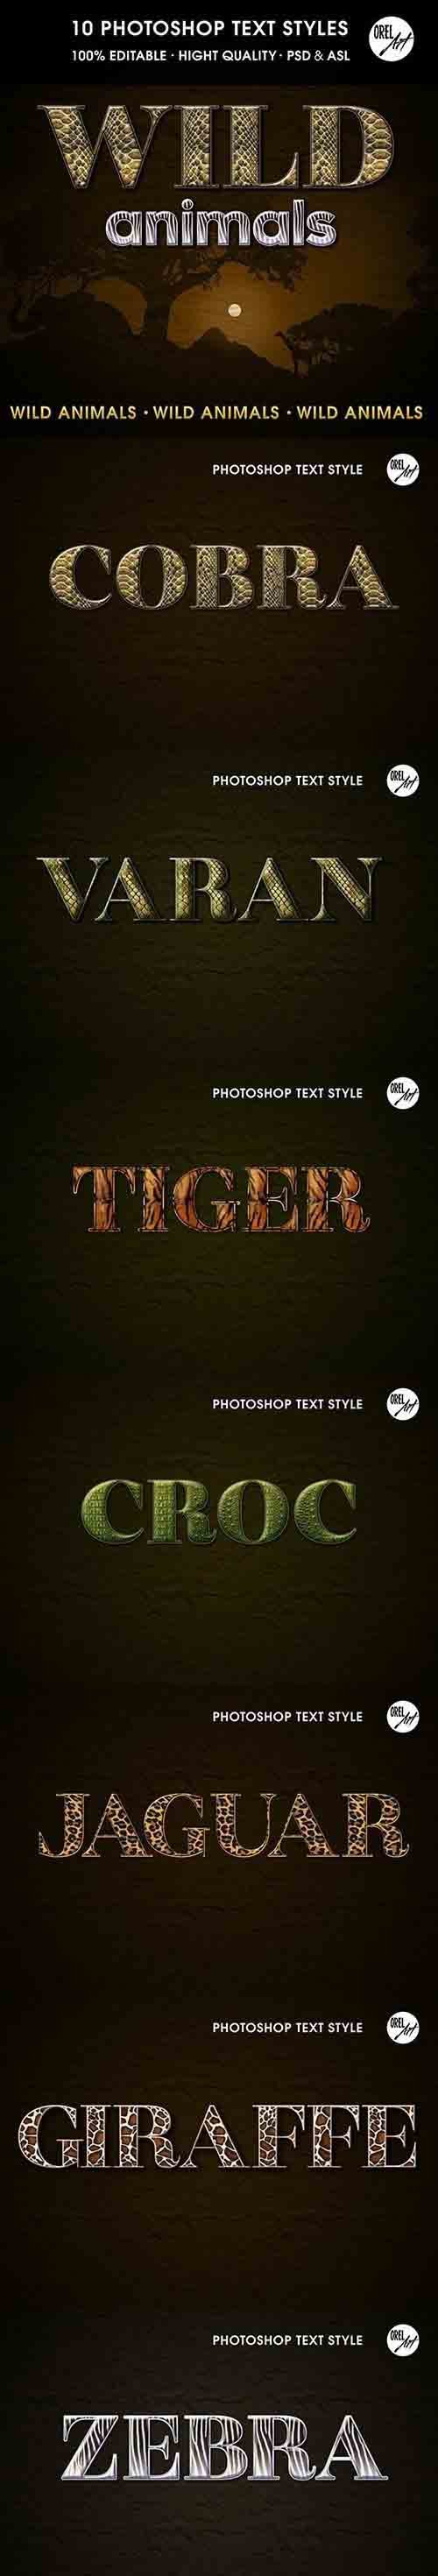 GraphicRiver - Wild Animals Text Styles 30385880